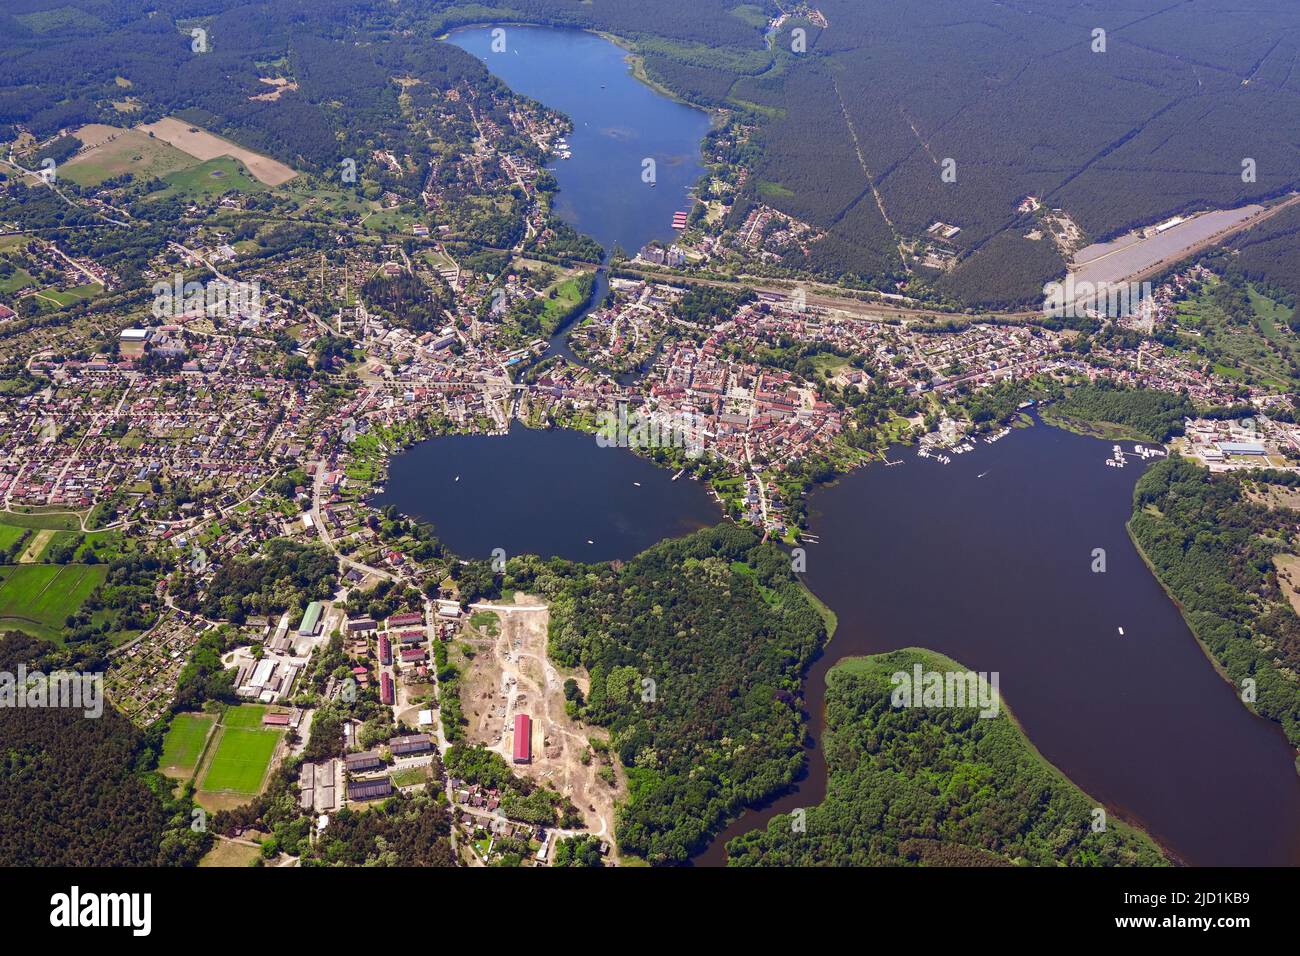 Aerial view of Fuerstenberg, Neustrelitz Kleinseenland, Granseer Platte, Havel, Stolpsee, Himmelpforter Heide, Thymensee, Grosser Wentowsee Stock Photo